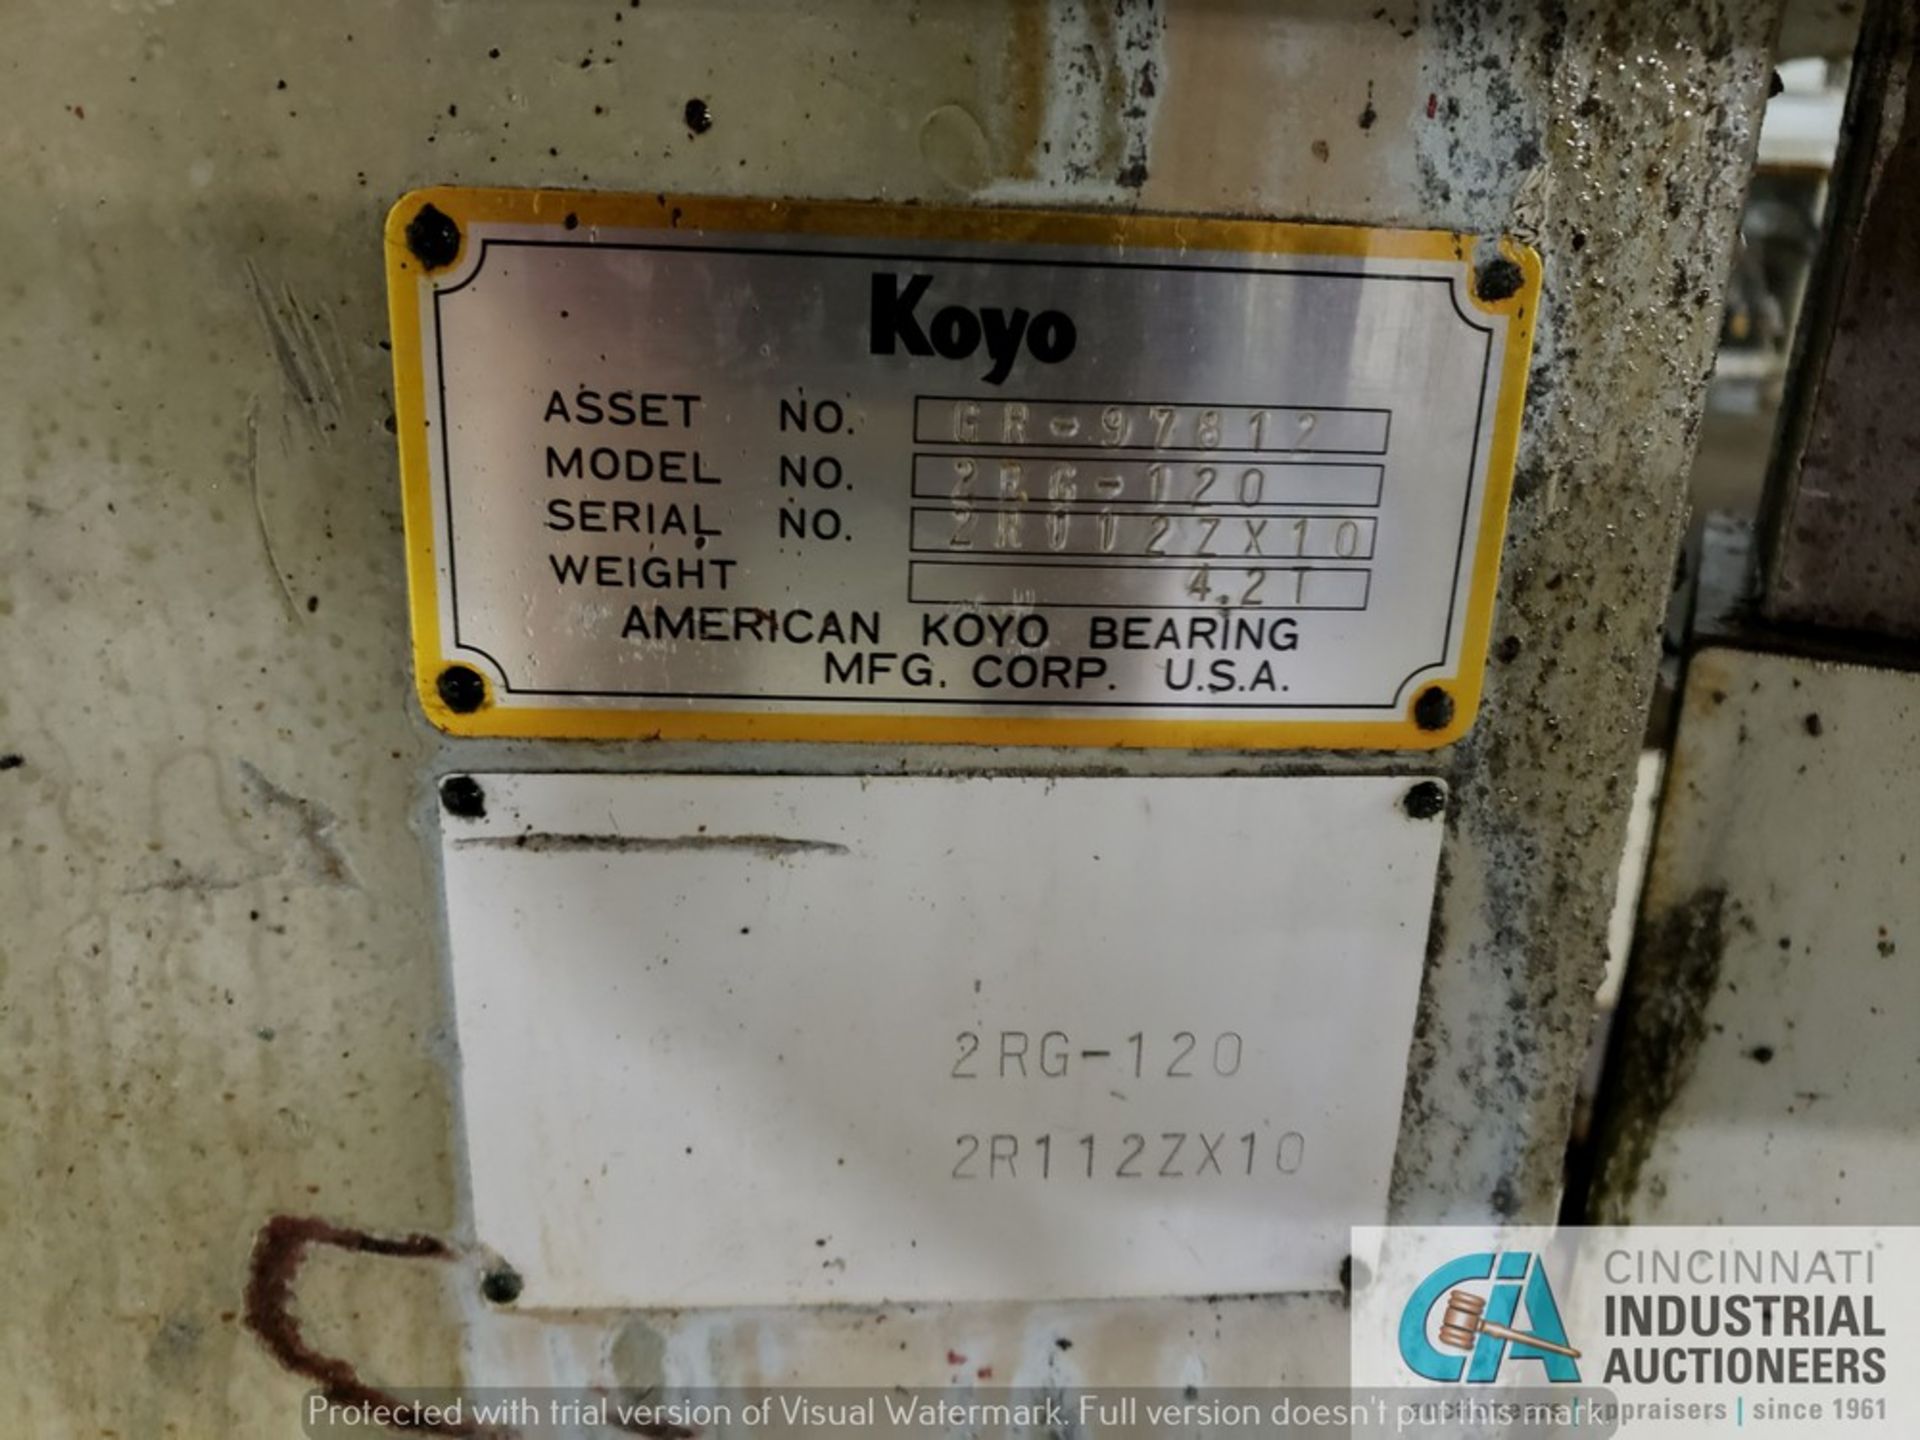 KOYO MODEL 2RG-120 RIB GRINDER; S/N 2R112ZX10, FANUC POWER MATE CONTROL - Machine located next door - Image 4 of 8